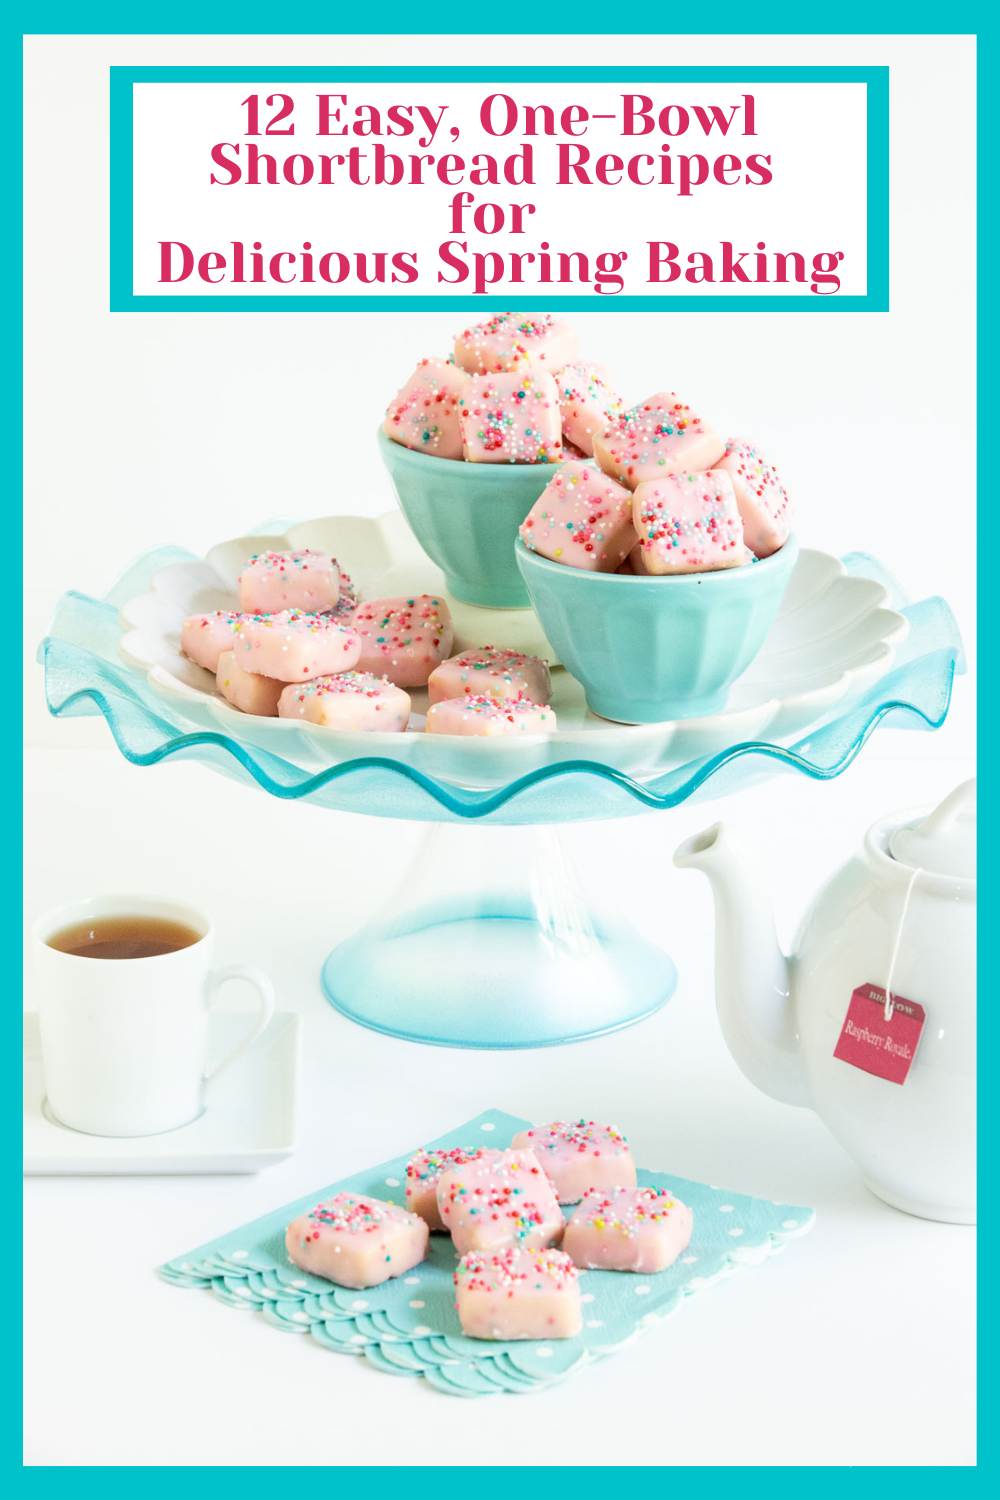 12 Easy One-Bowl Shortbread Recipes for Delicious Spring Baking